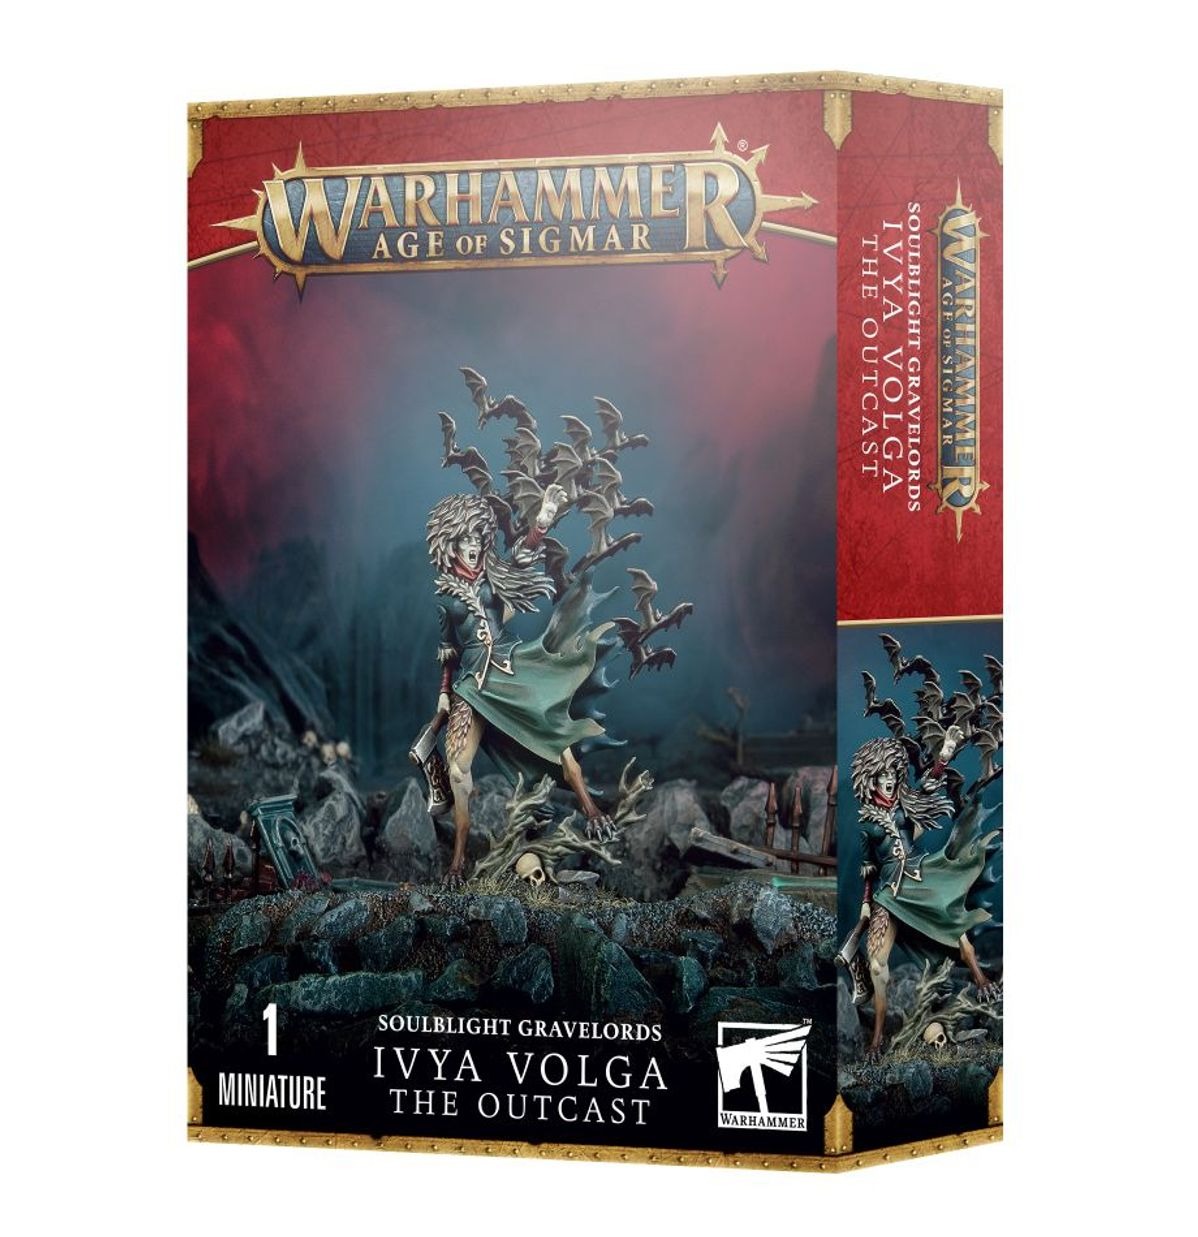 Миниатюры для игры Games Workshop Warhammer Age of Sigmar: Ivya Volga, the Outcast 91-17